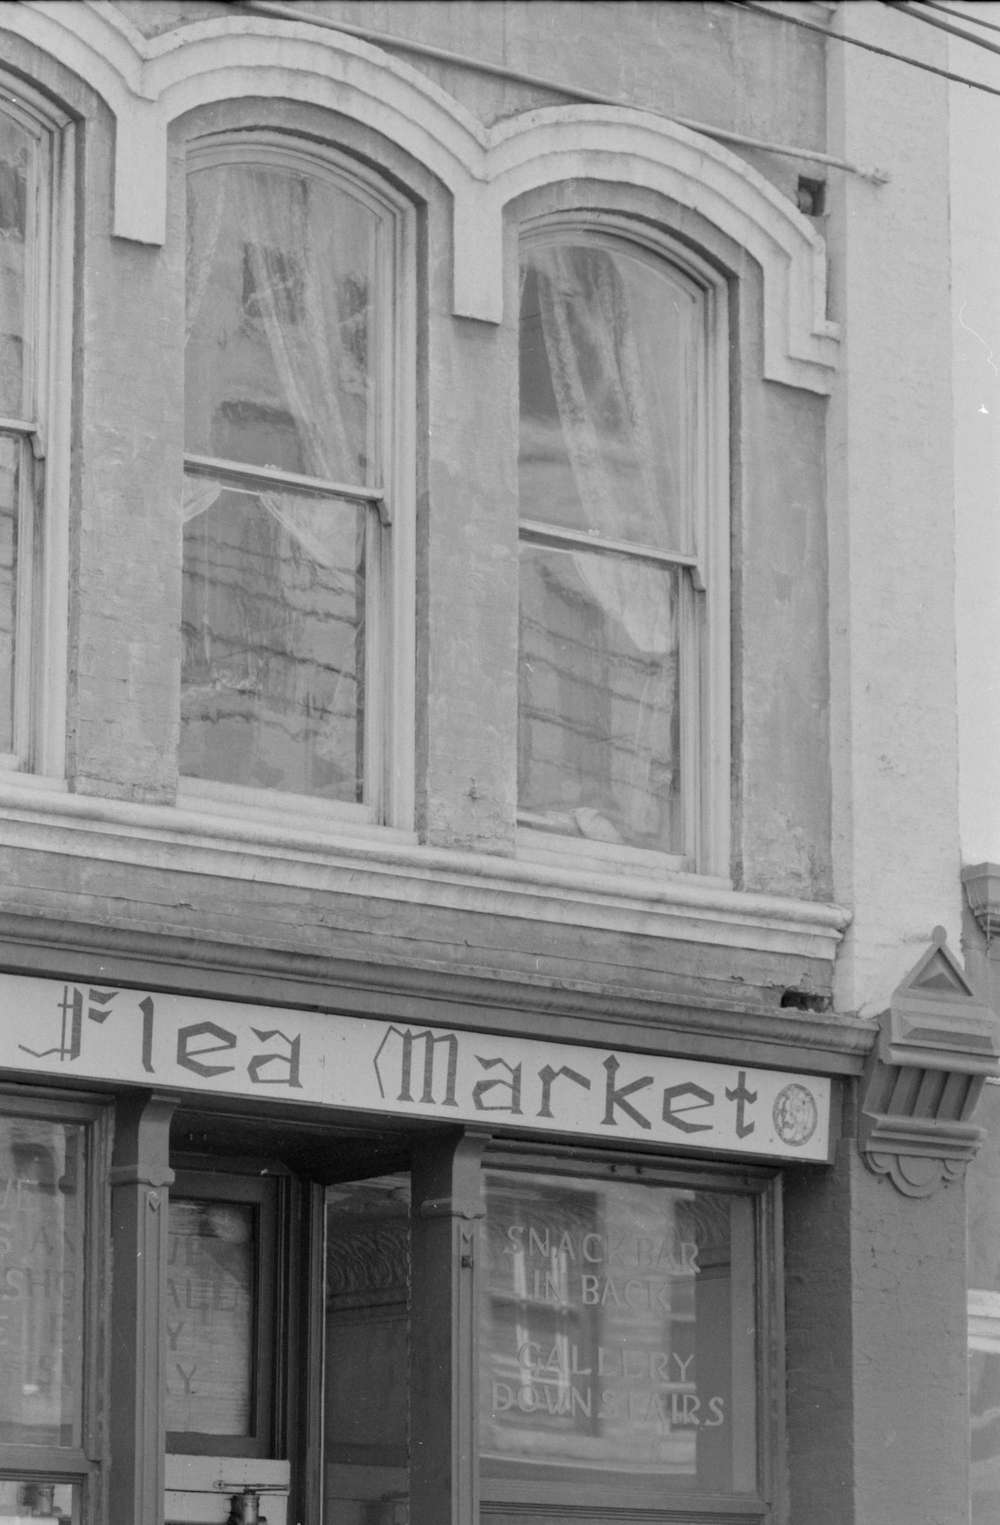 1969 - Detail view at 26 Water Street - Flea Market storefront